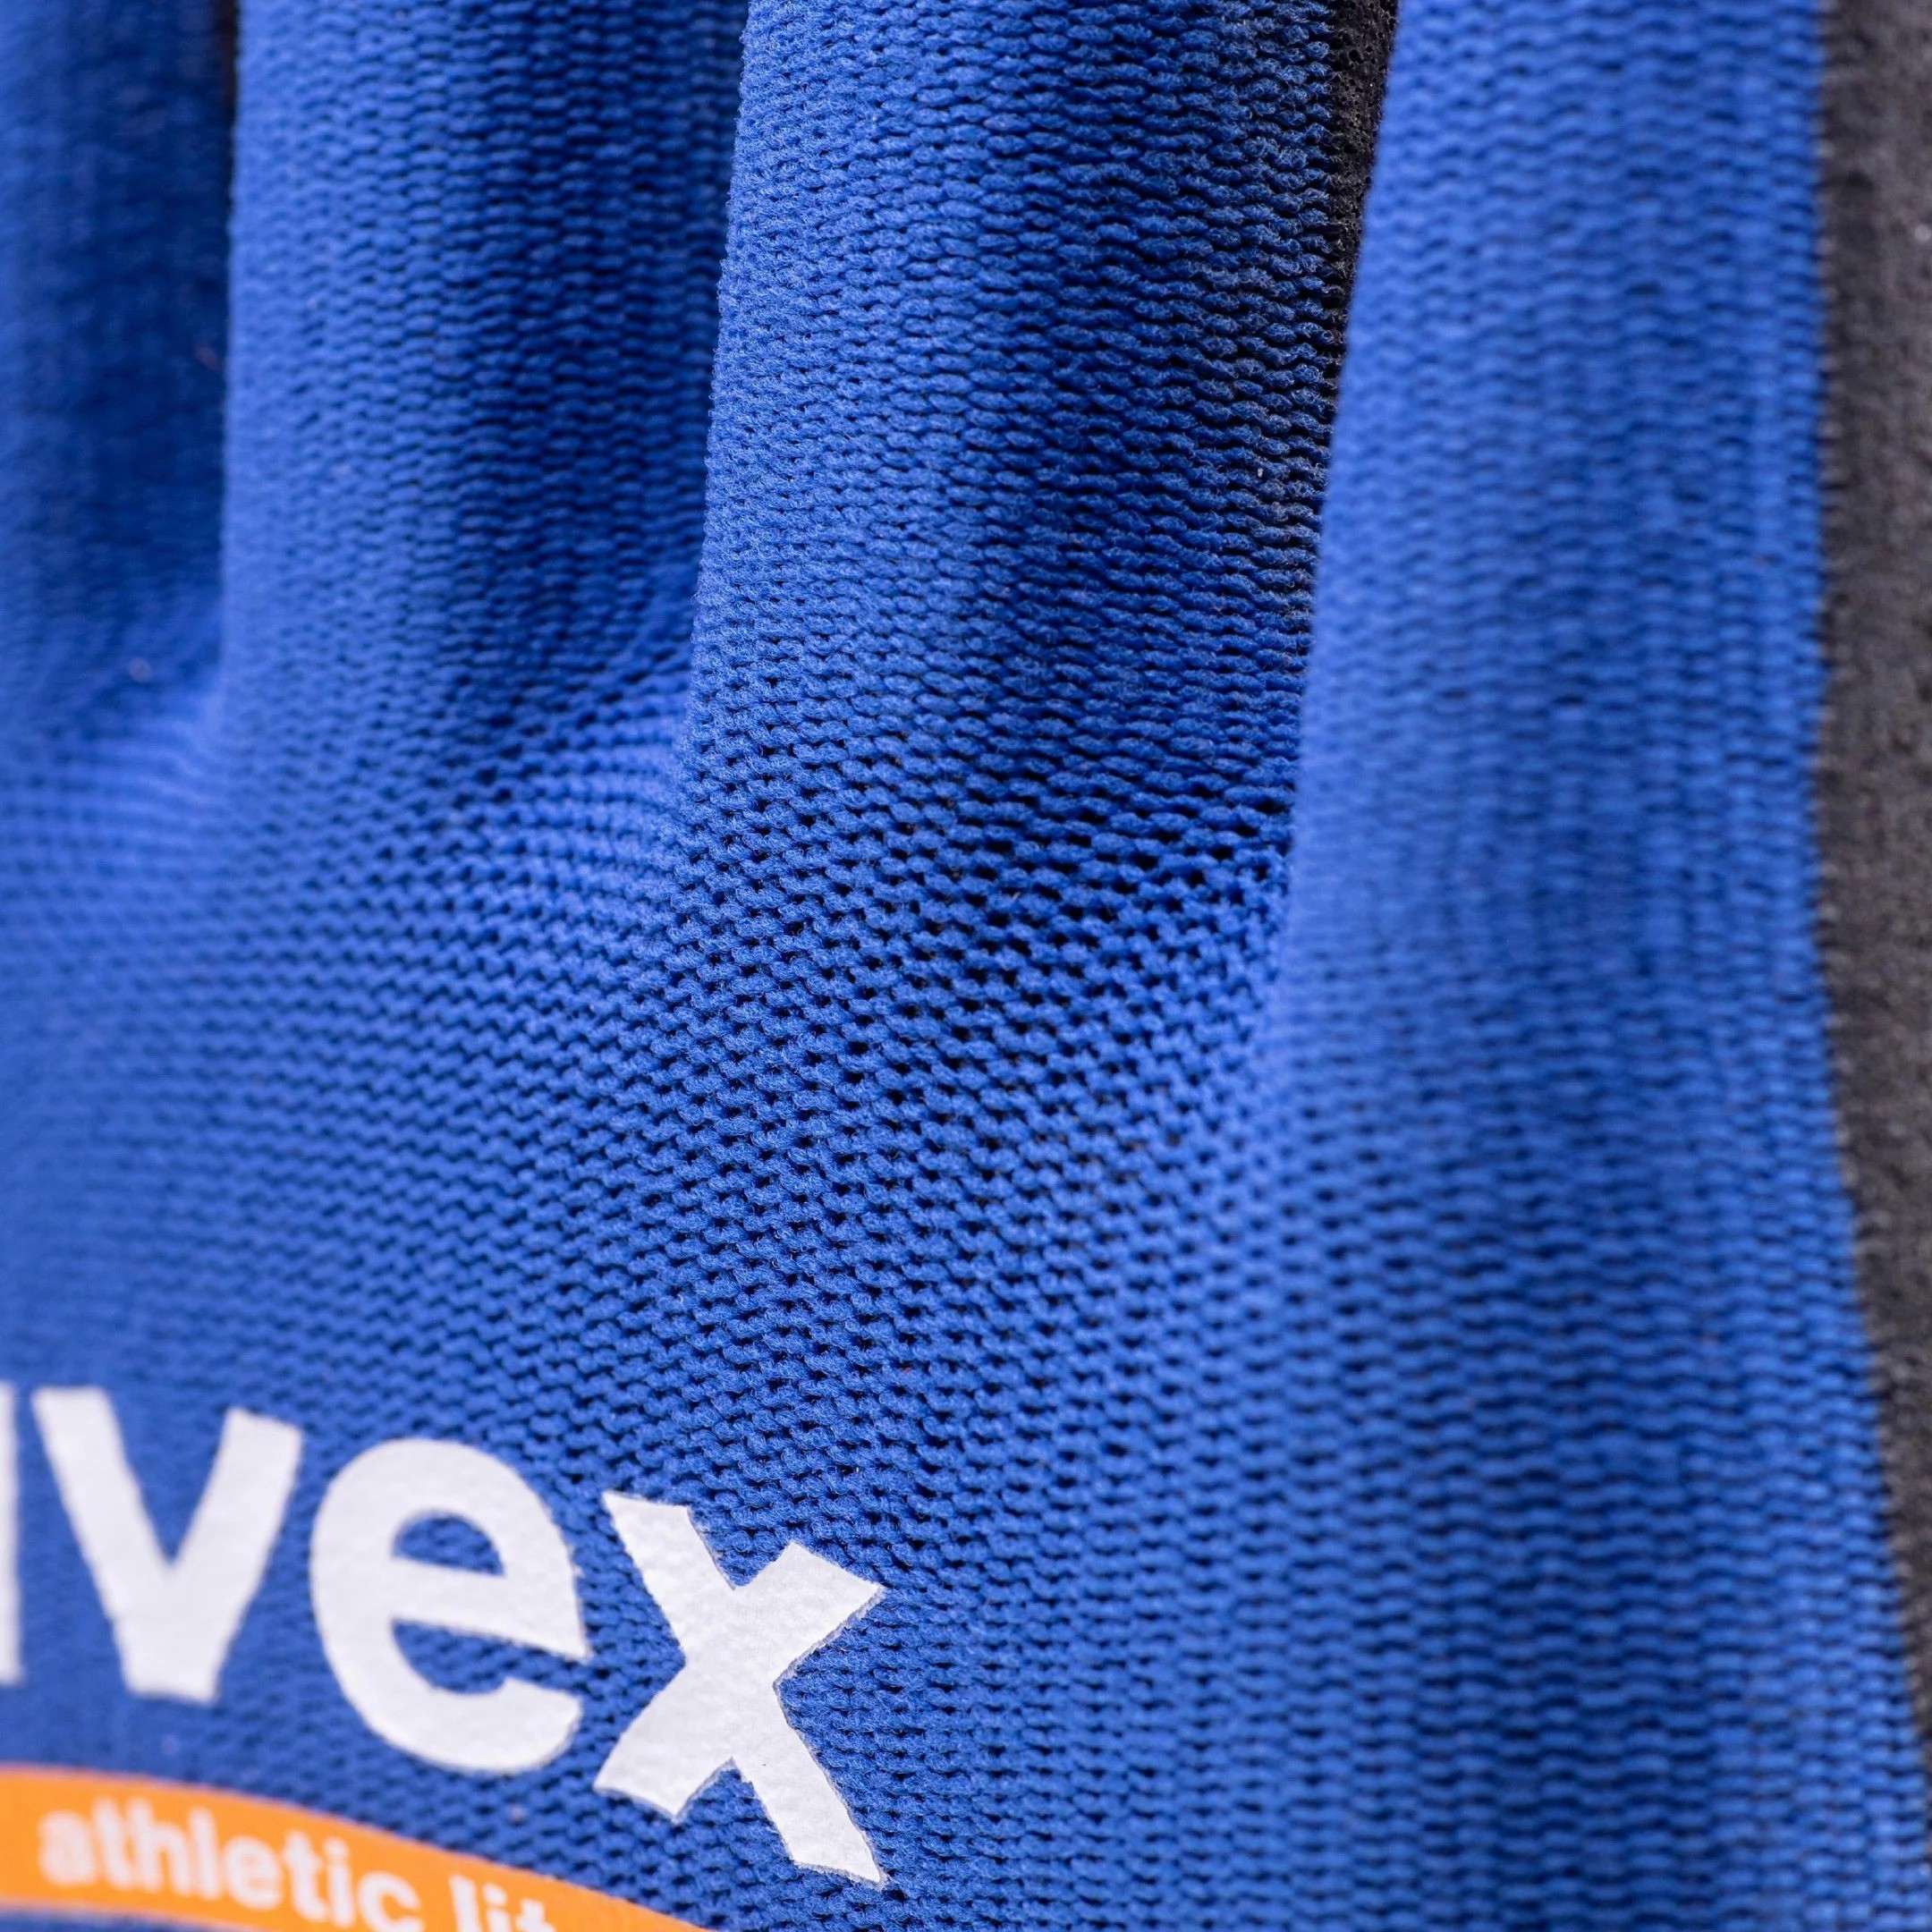 Uvex Athletic Lite Slim Fit Fitting Glove